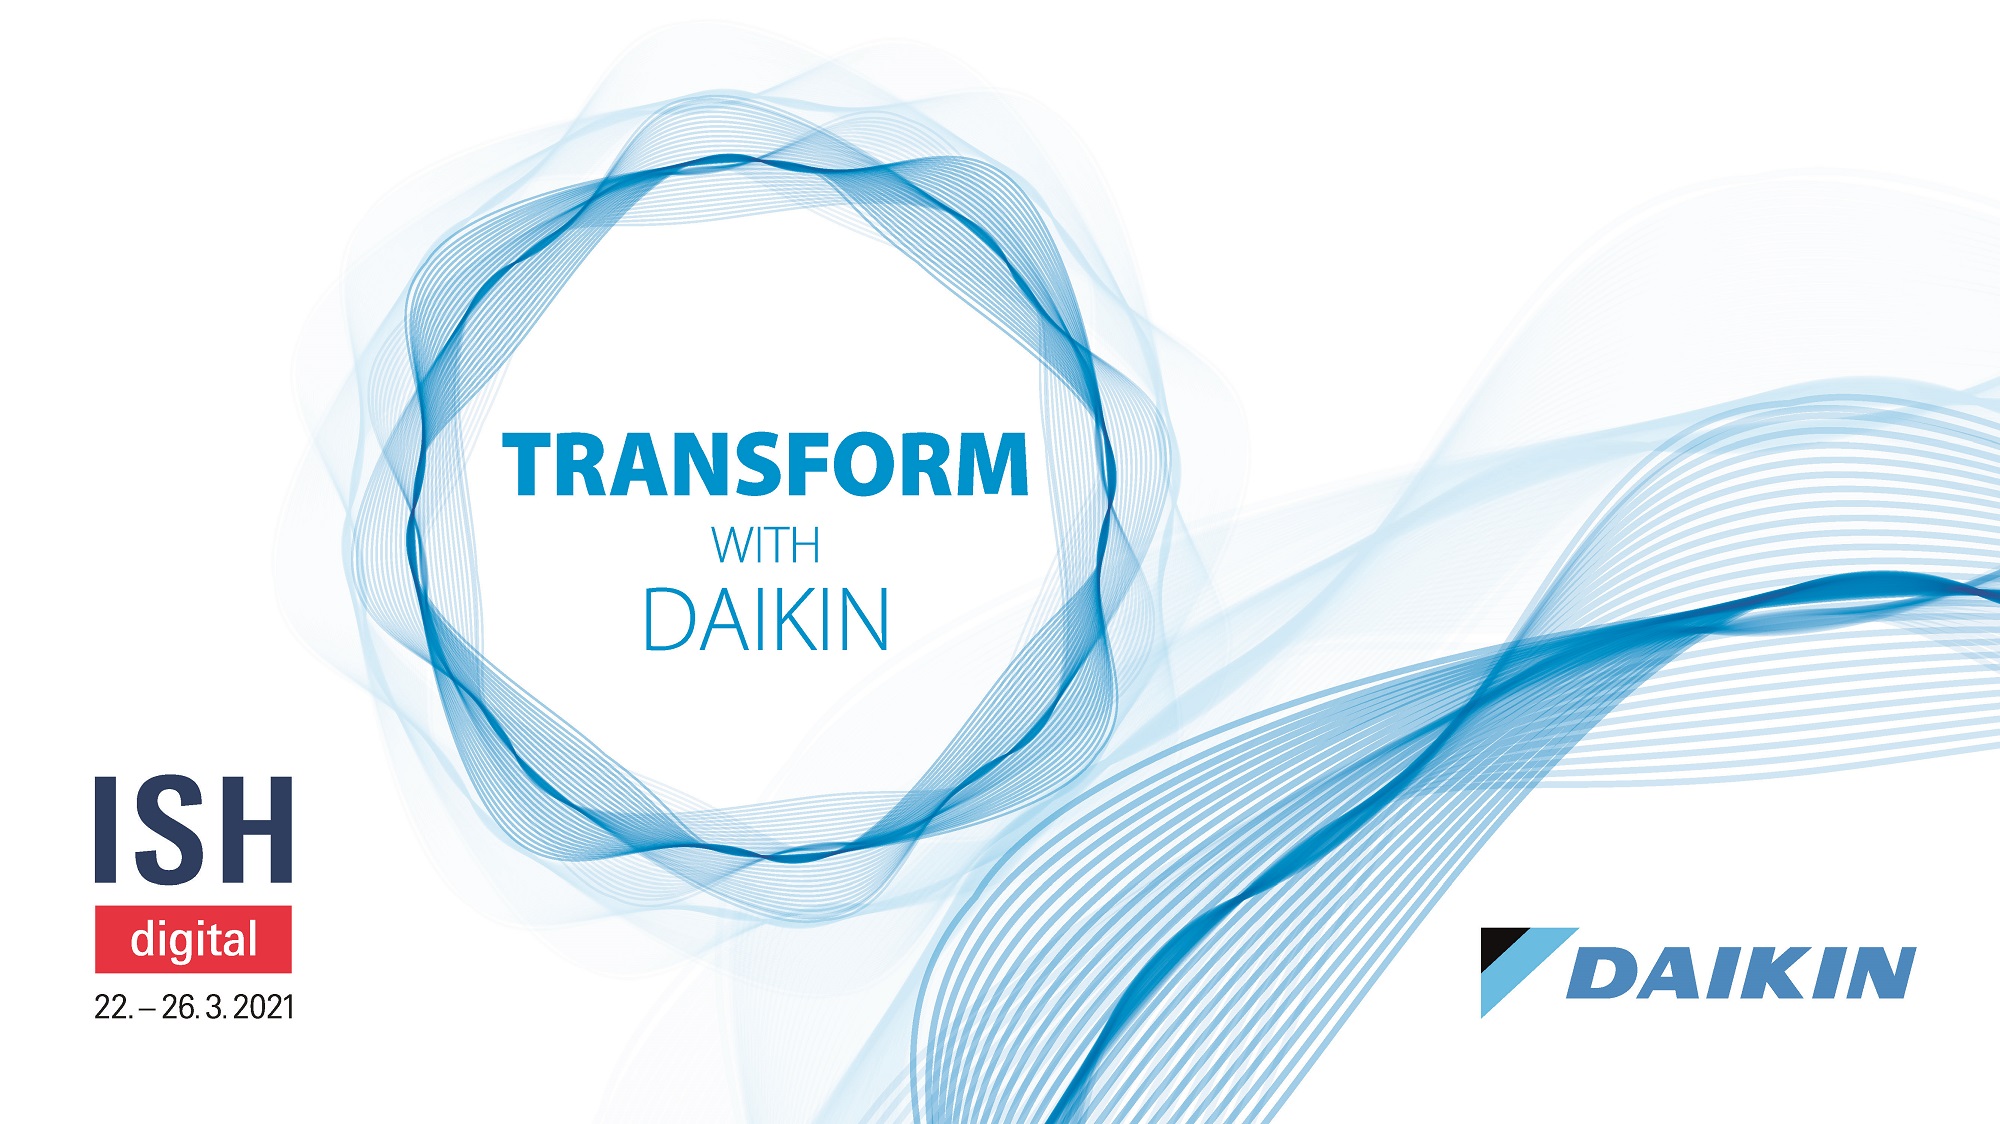 Daikin will hold a series of webinars at ISH digital 2021, entitled Transform with Daikin.